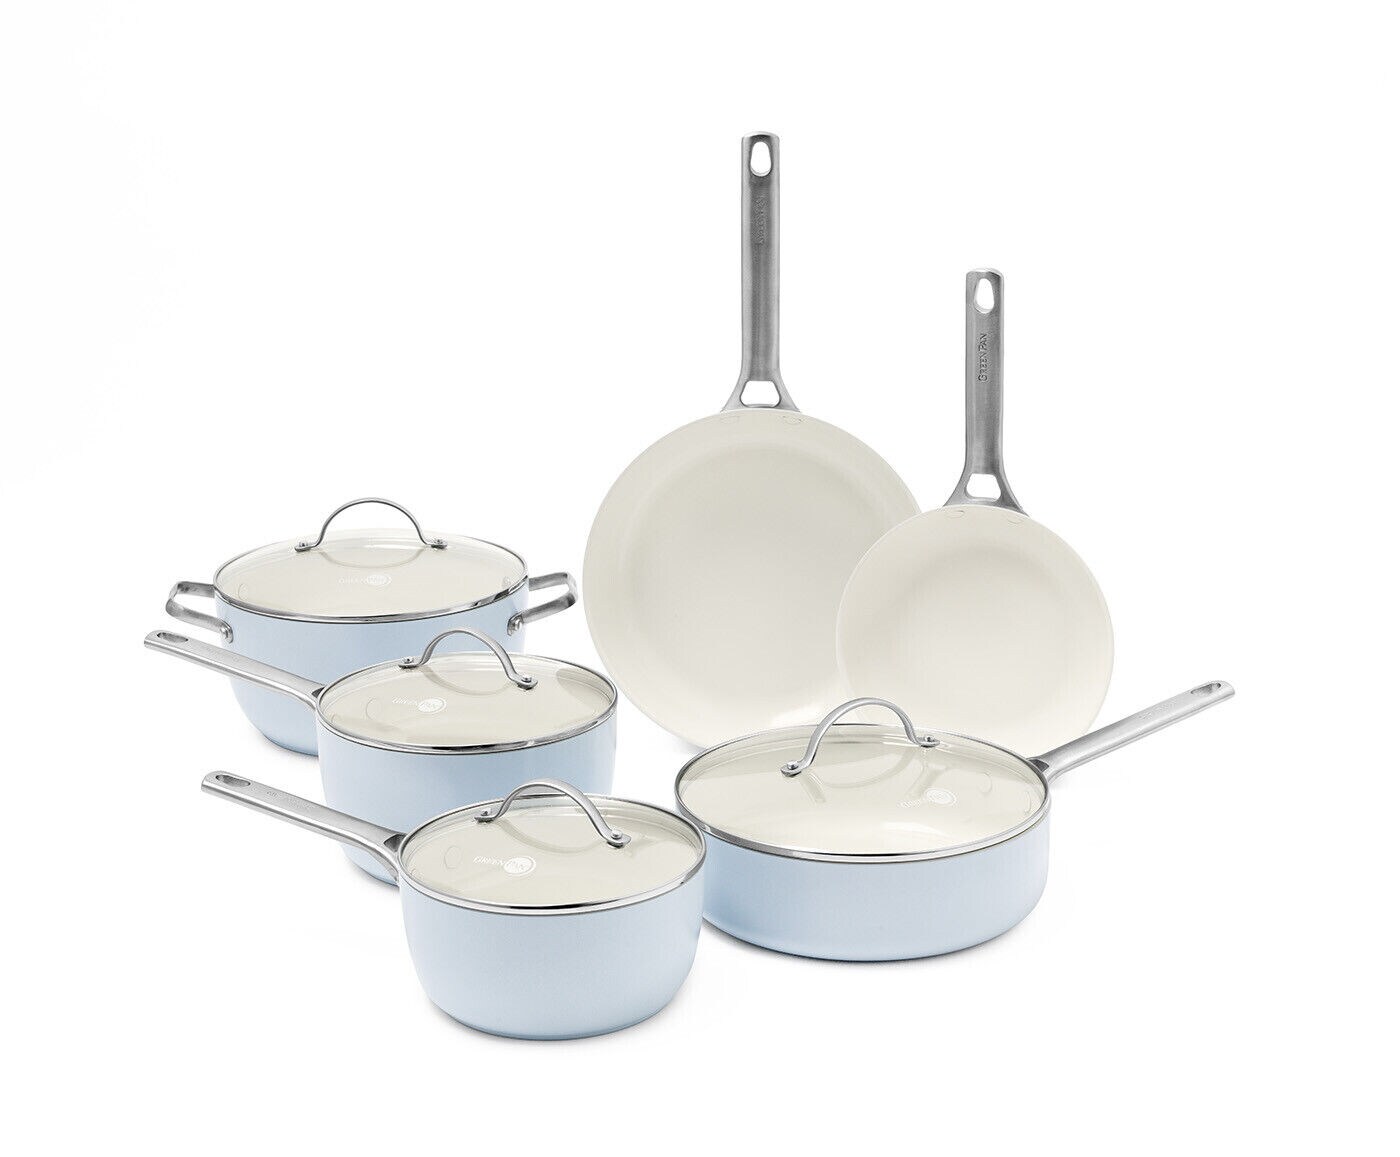 GREENPAN Ceramic Nonstick Cookware Pots and Pans Set